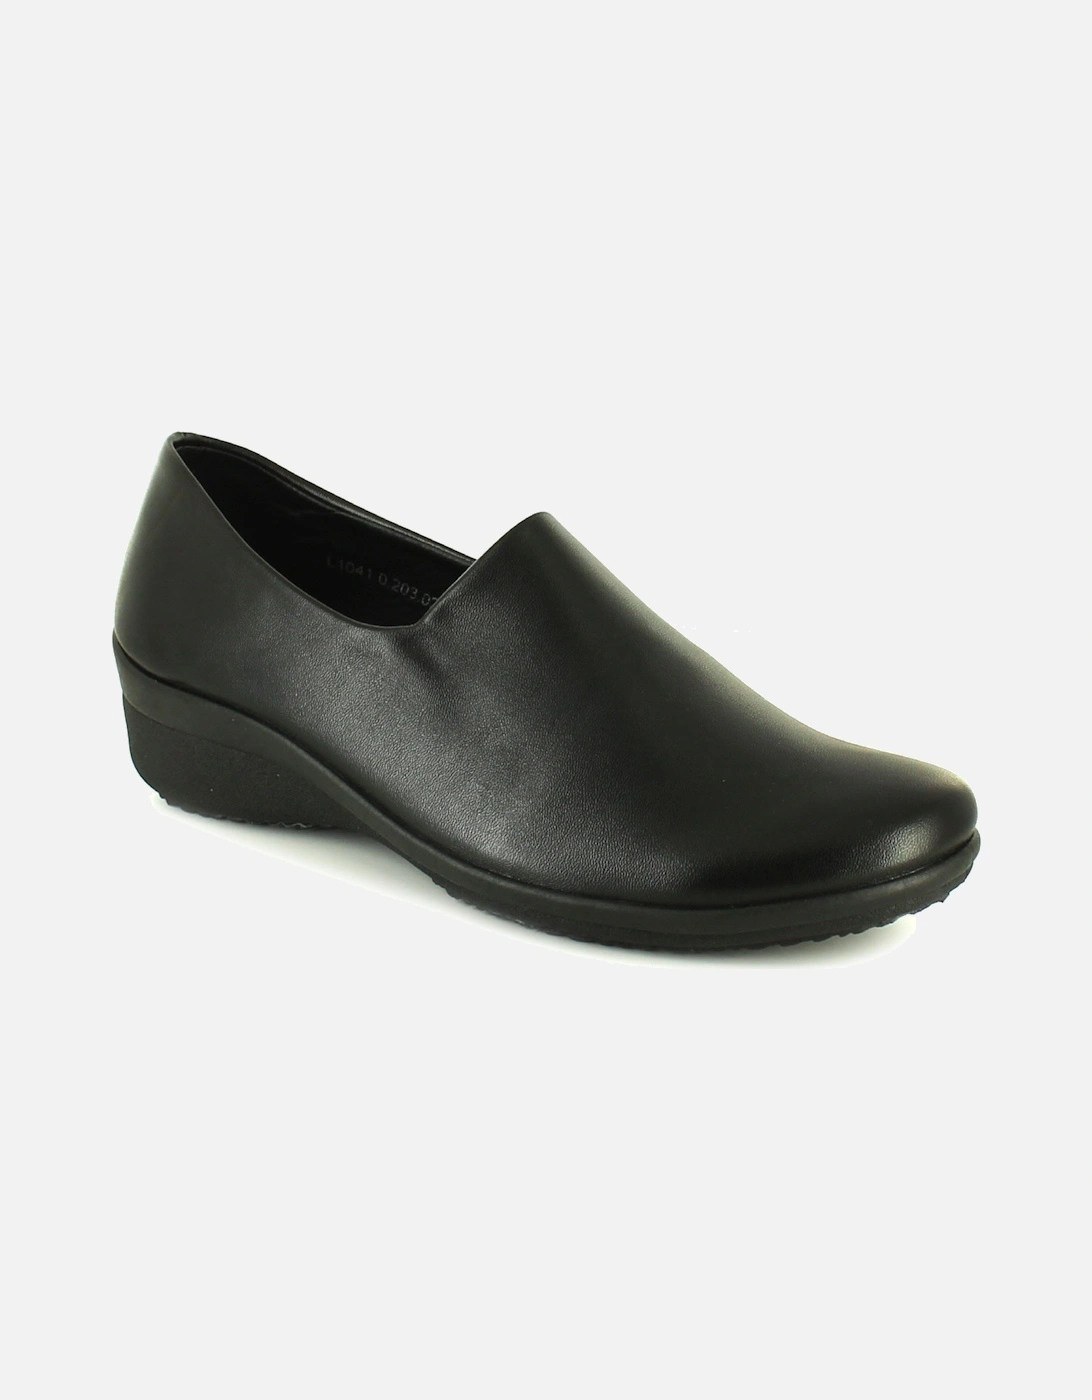 Womens Shoes Flat Reach2 Slip On black UK Size, 5 of 4